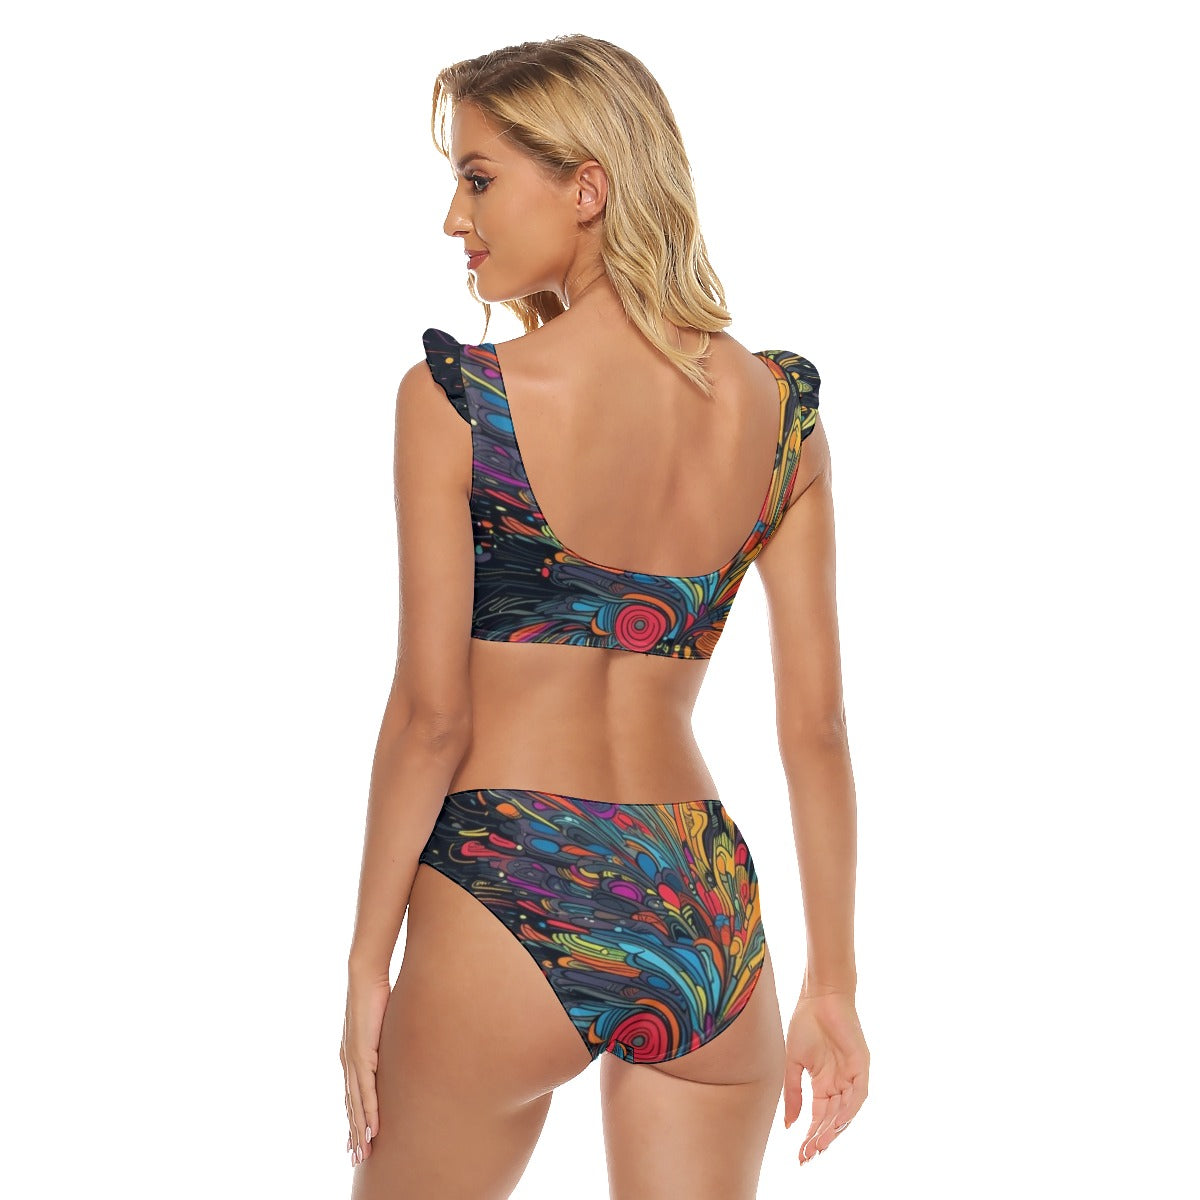 All-Over Print Women's Bikini Swimsuit With Ruffle Cuff Bra